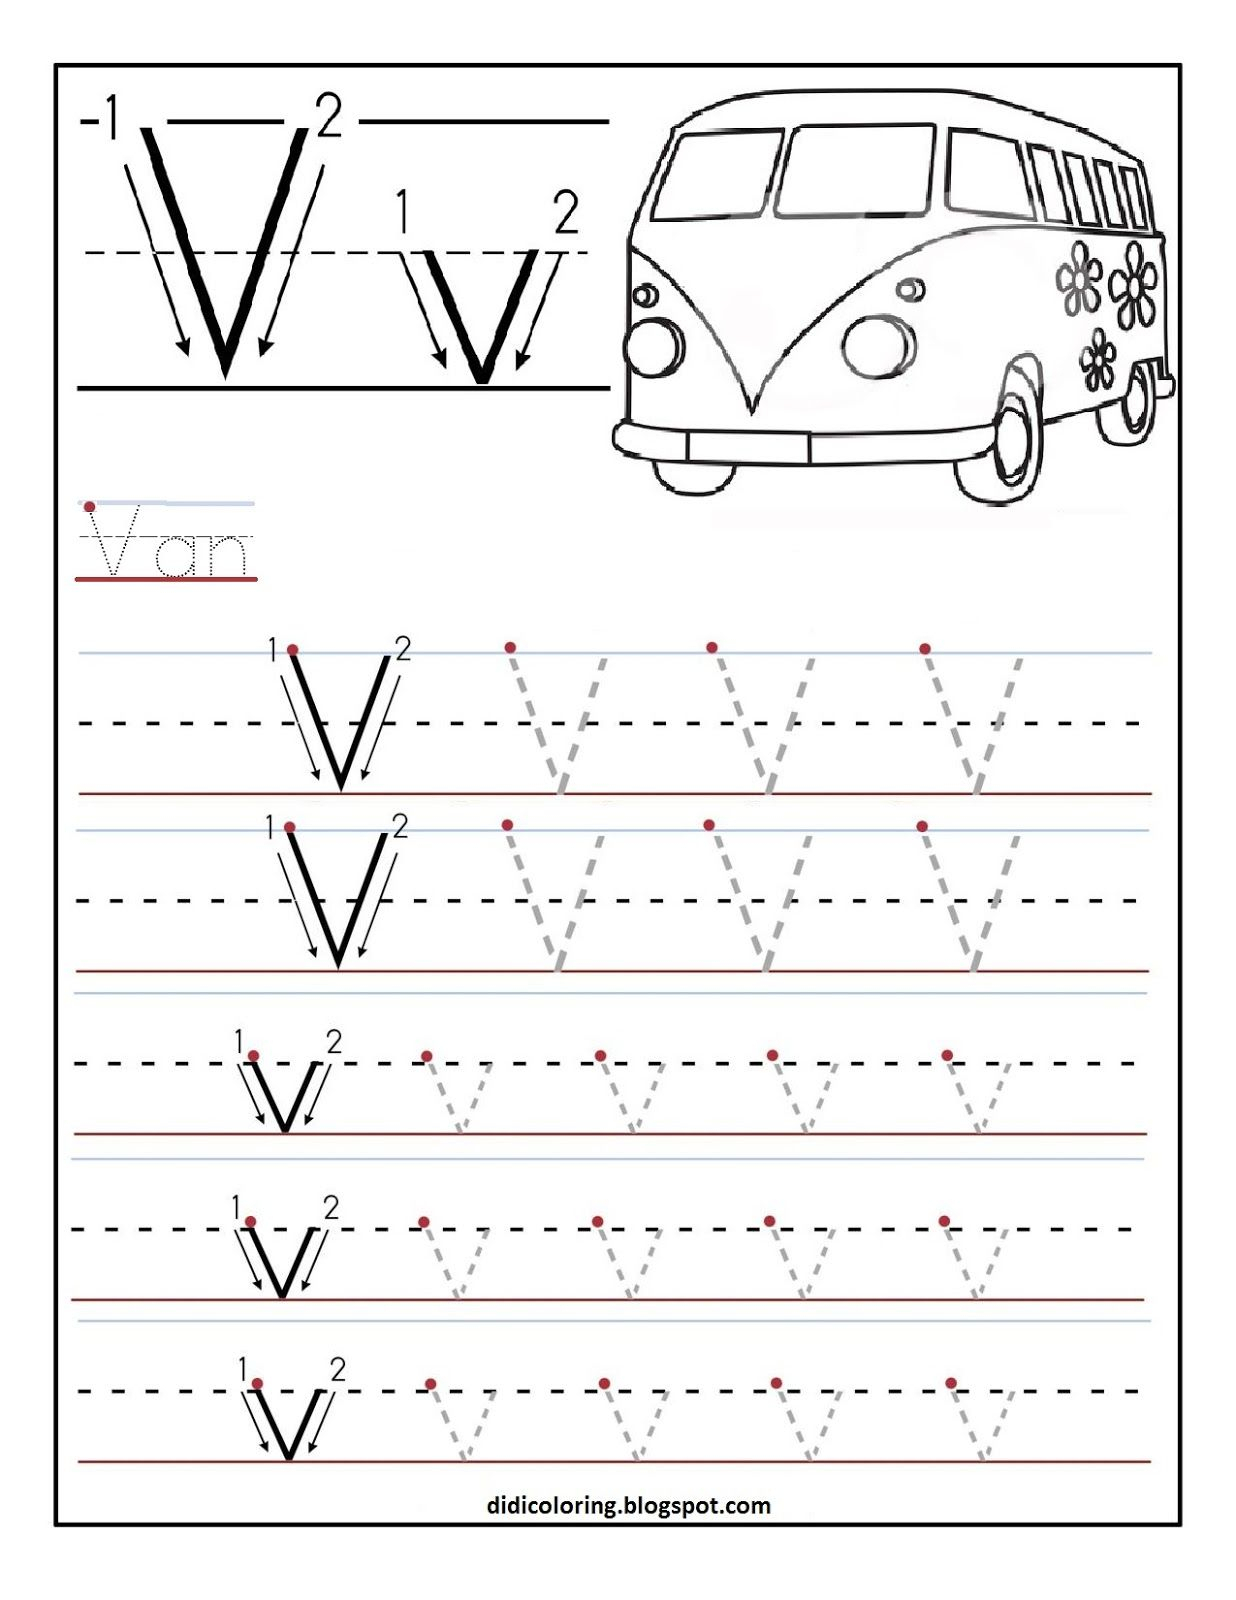 Free Printable Worksheet Letter V For Your Child To Learn throughout Alphabet Letter V Worksheets